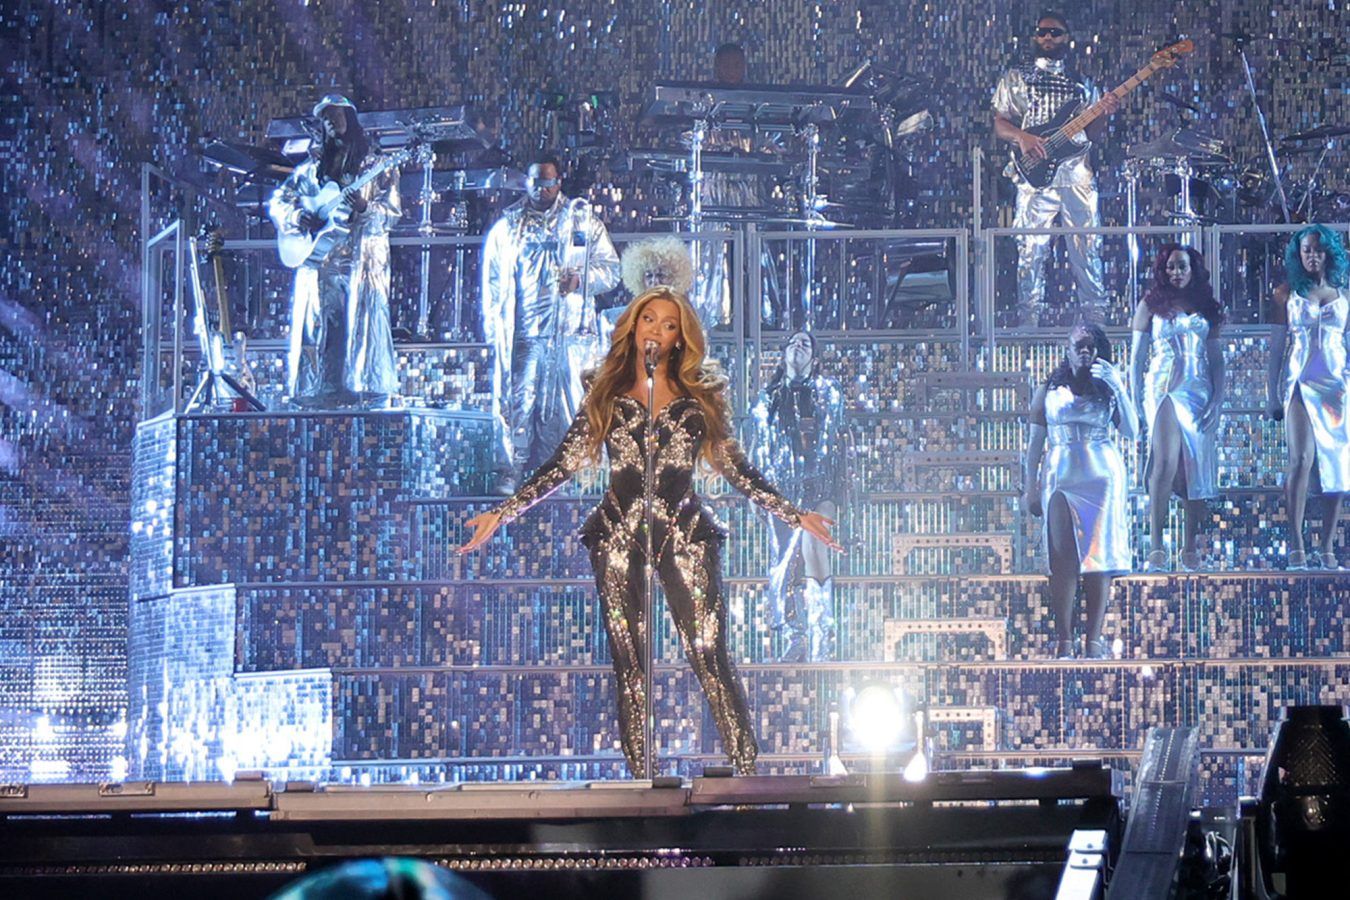 A look at Beyoncé's most glamorous Renaissance world tour outfits